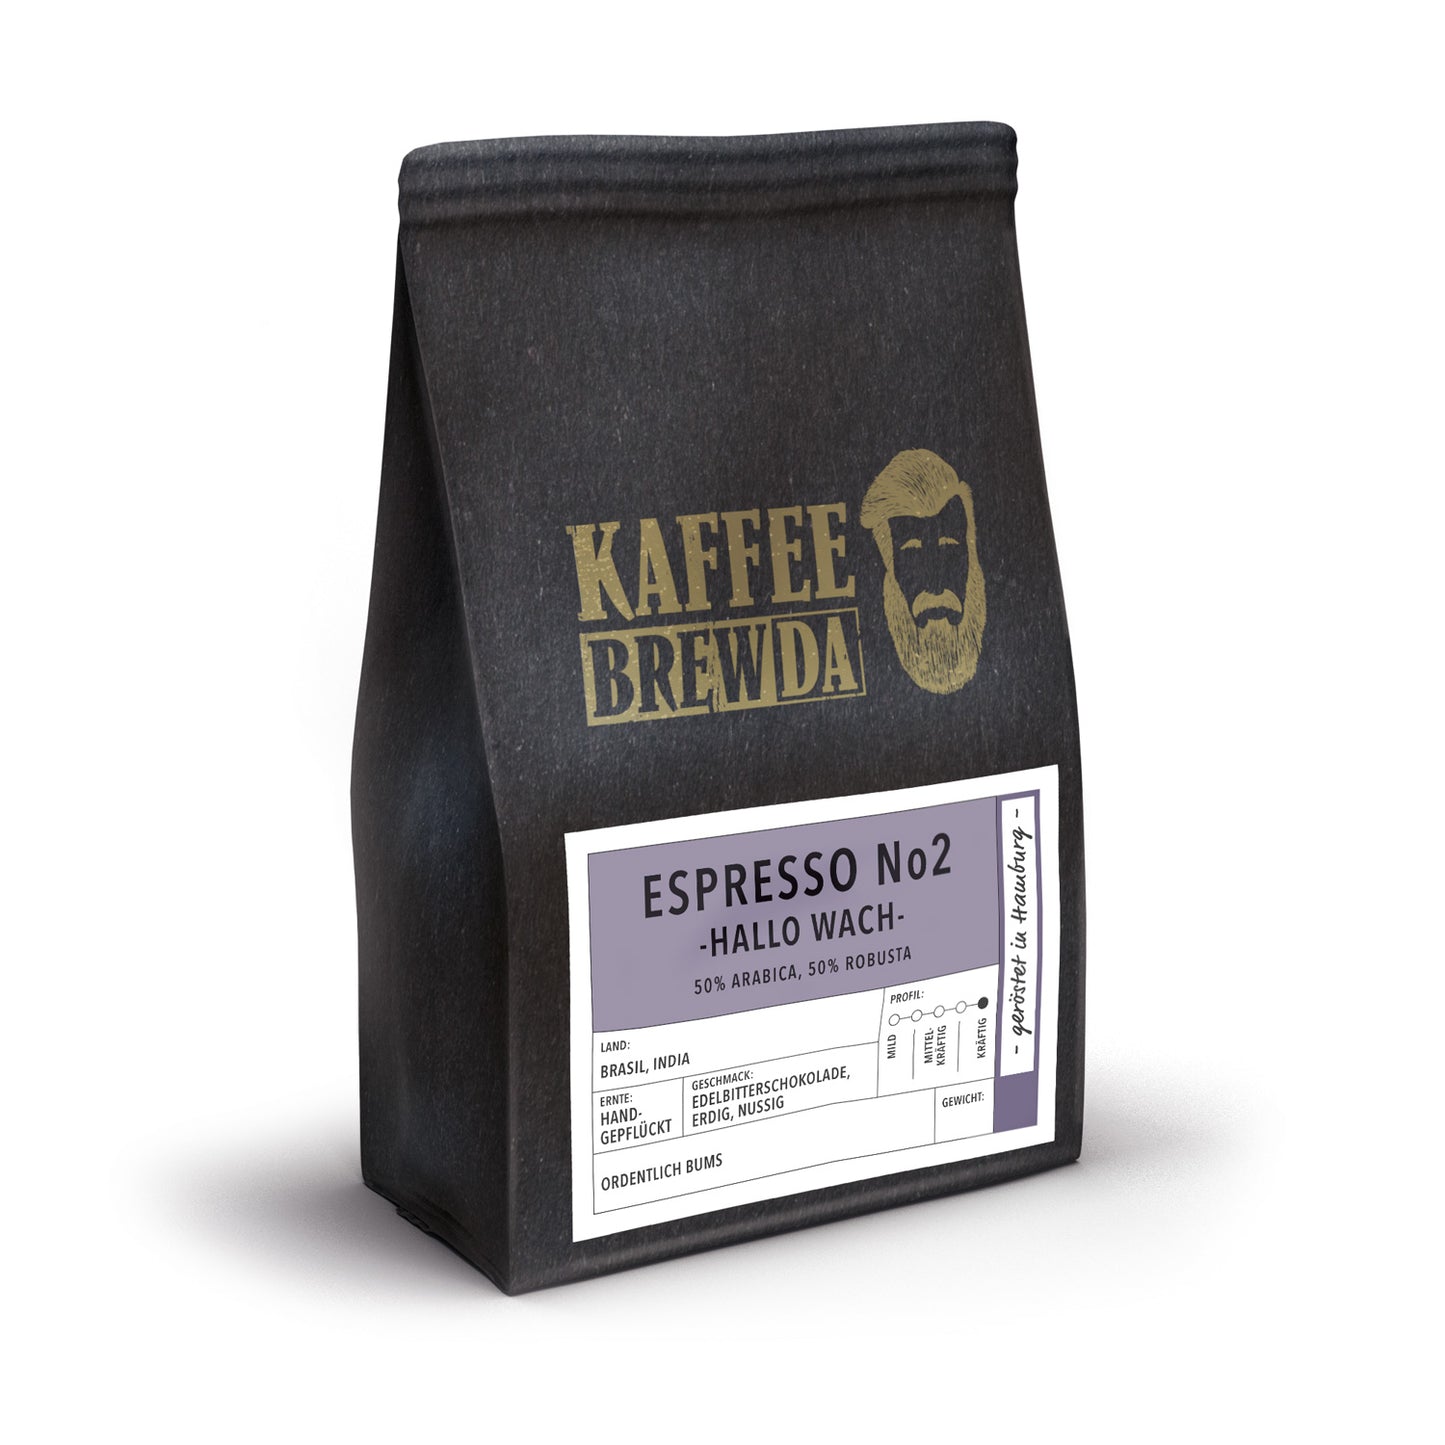 kaffeebrewda-espresso-no2-hallo-wach